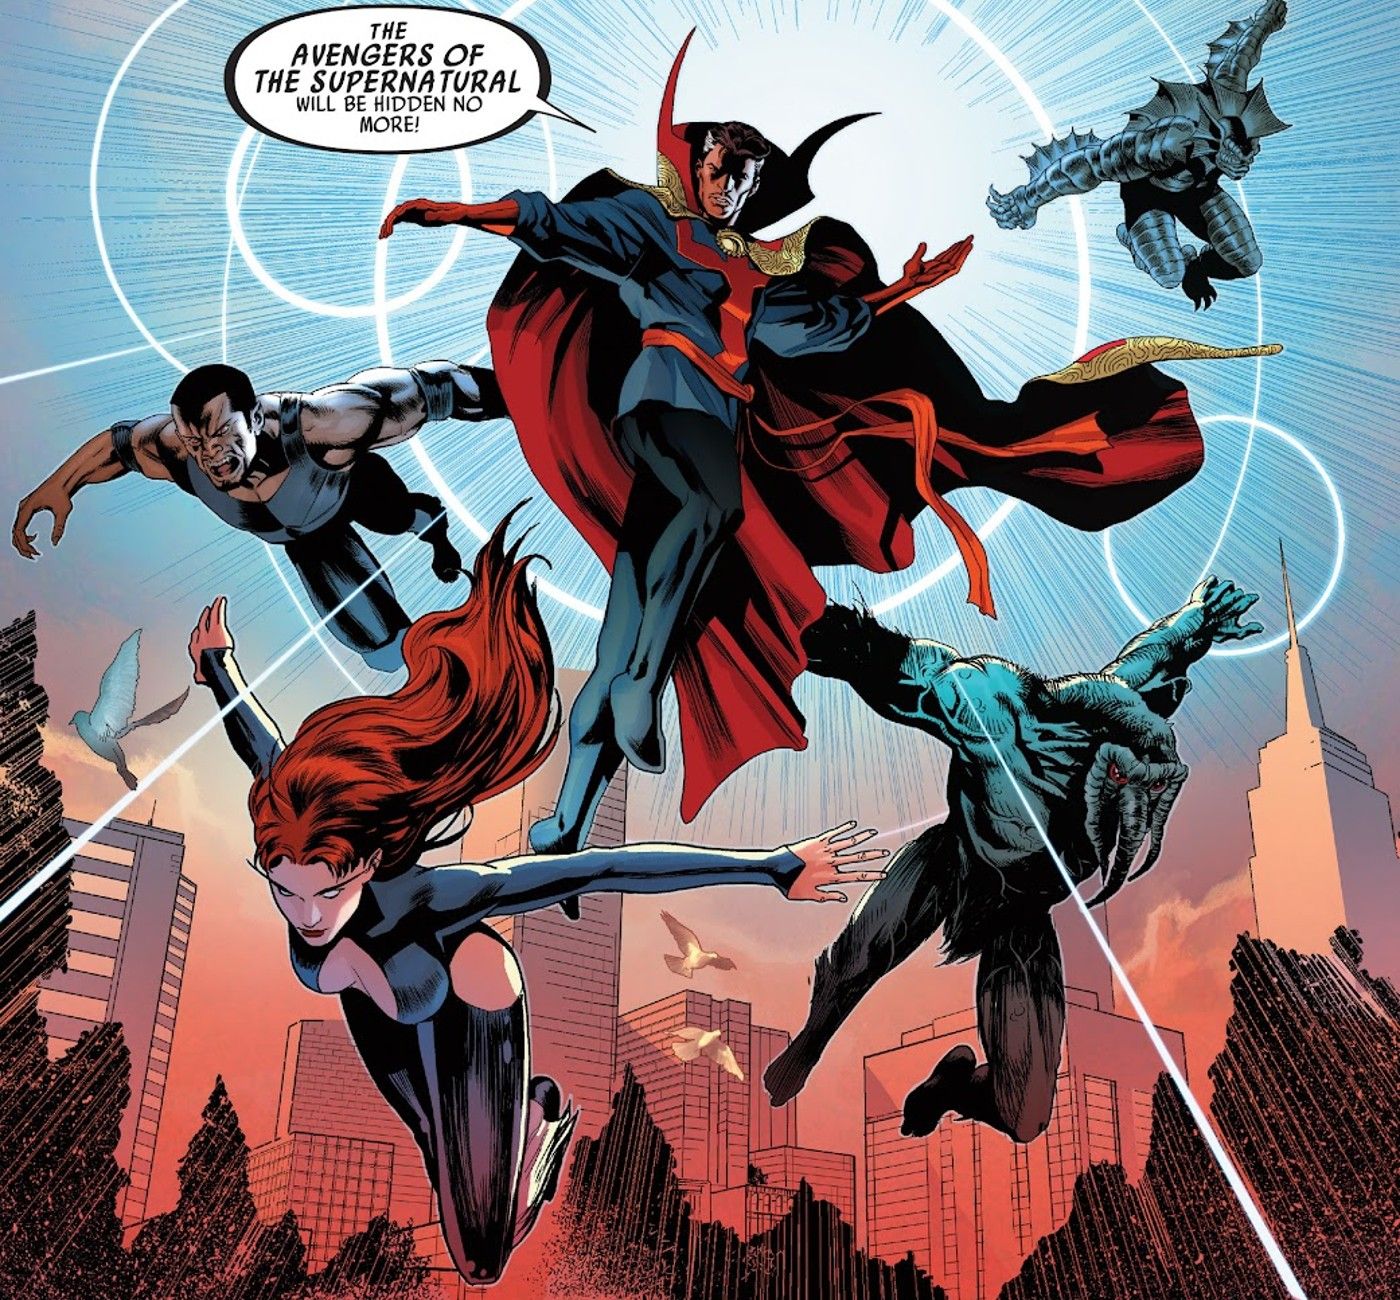 The "Avengers of the Supernatural": Blade, Doctor Strange, Manphibian, Satana, and Man-Thing.